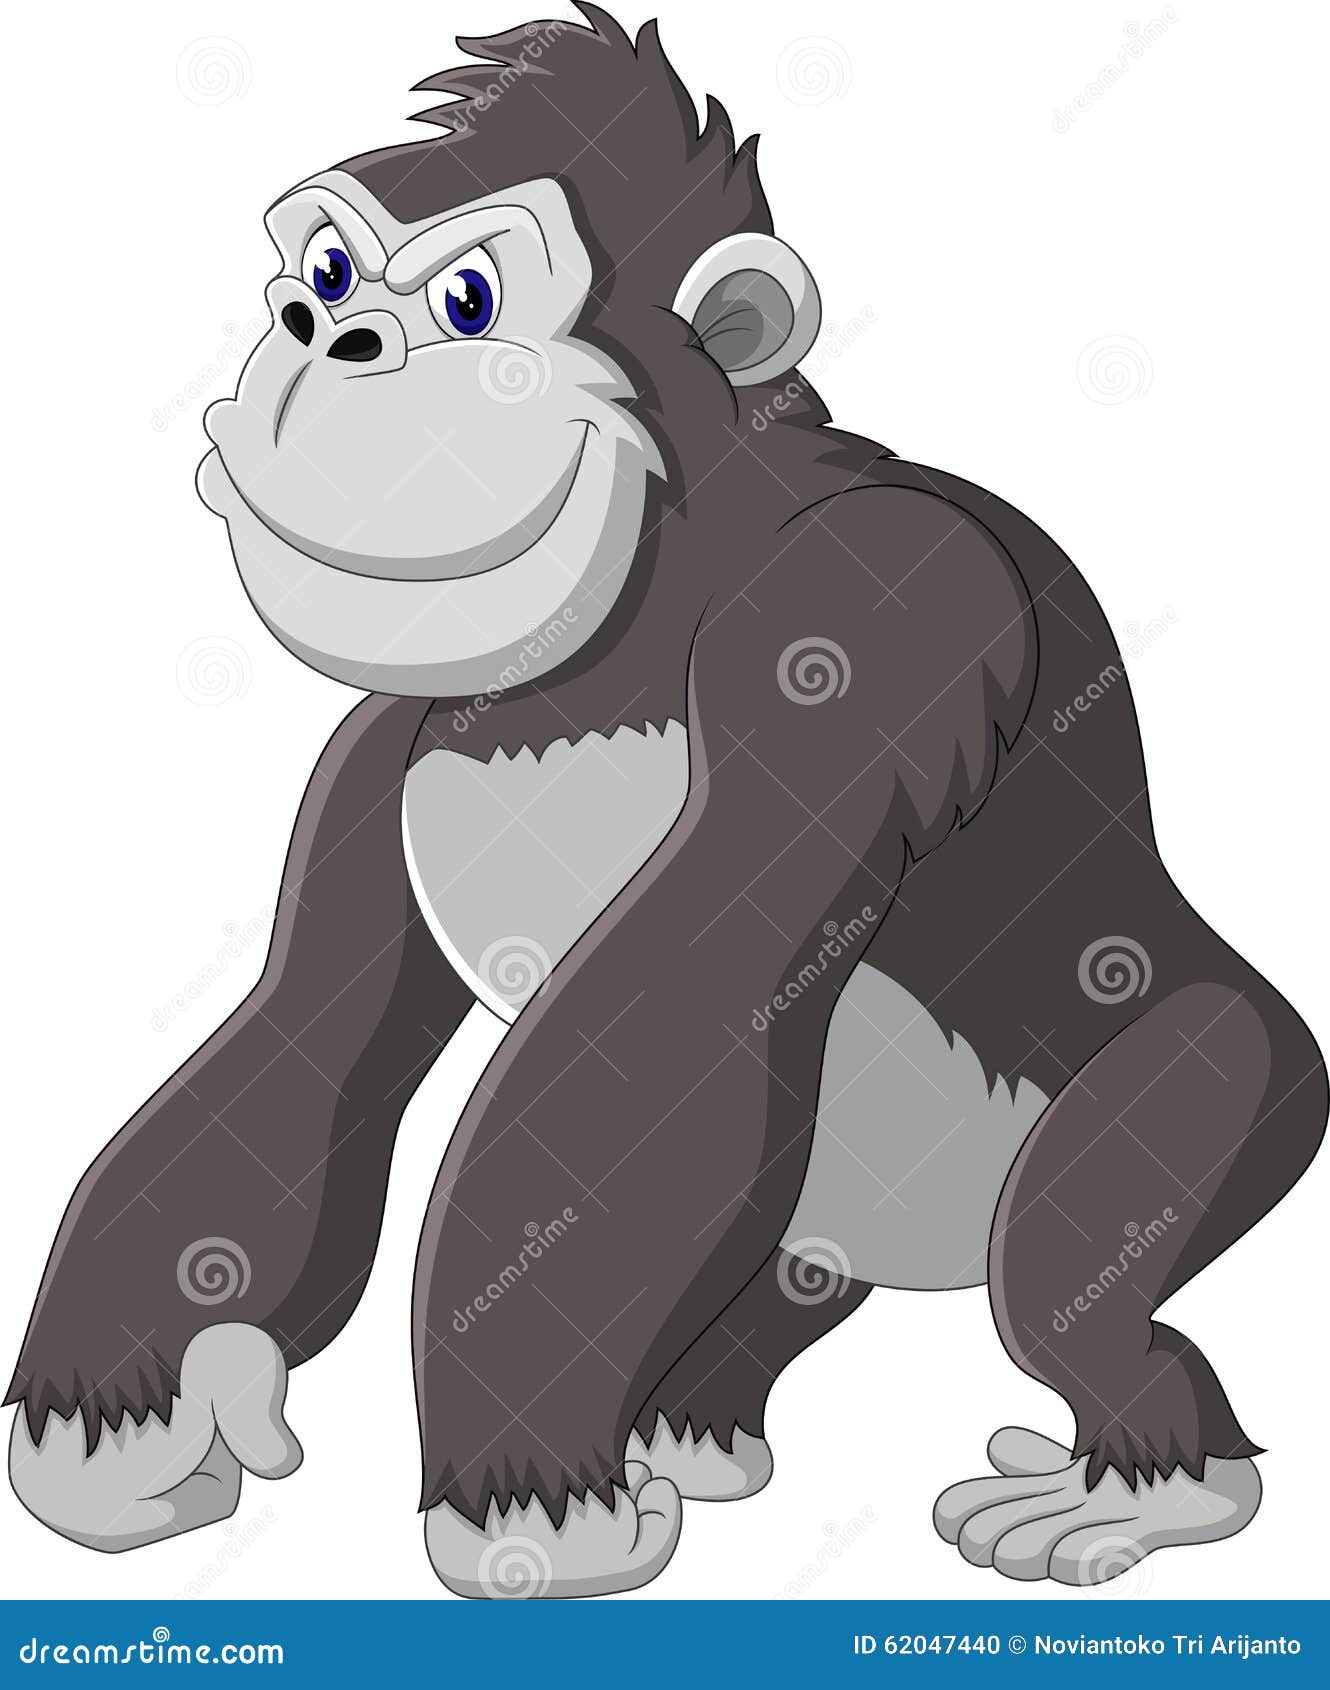 Funny gorilla cartoon stock vector. Illustration of monkey - 62047440